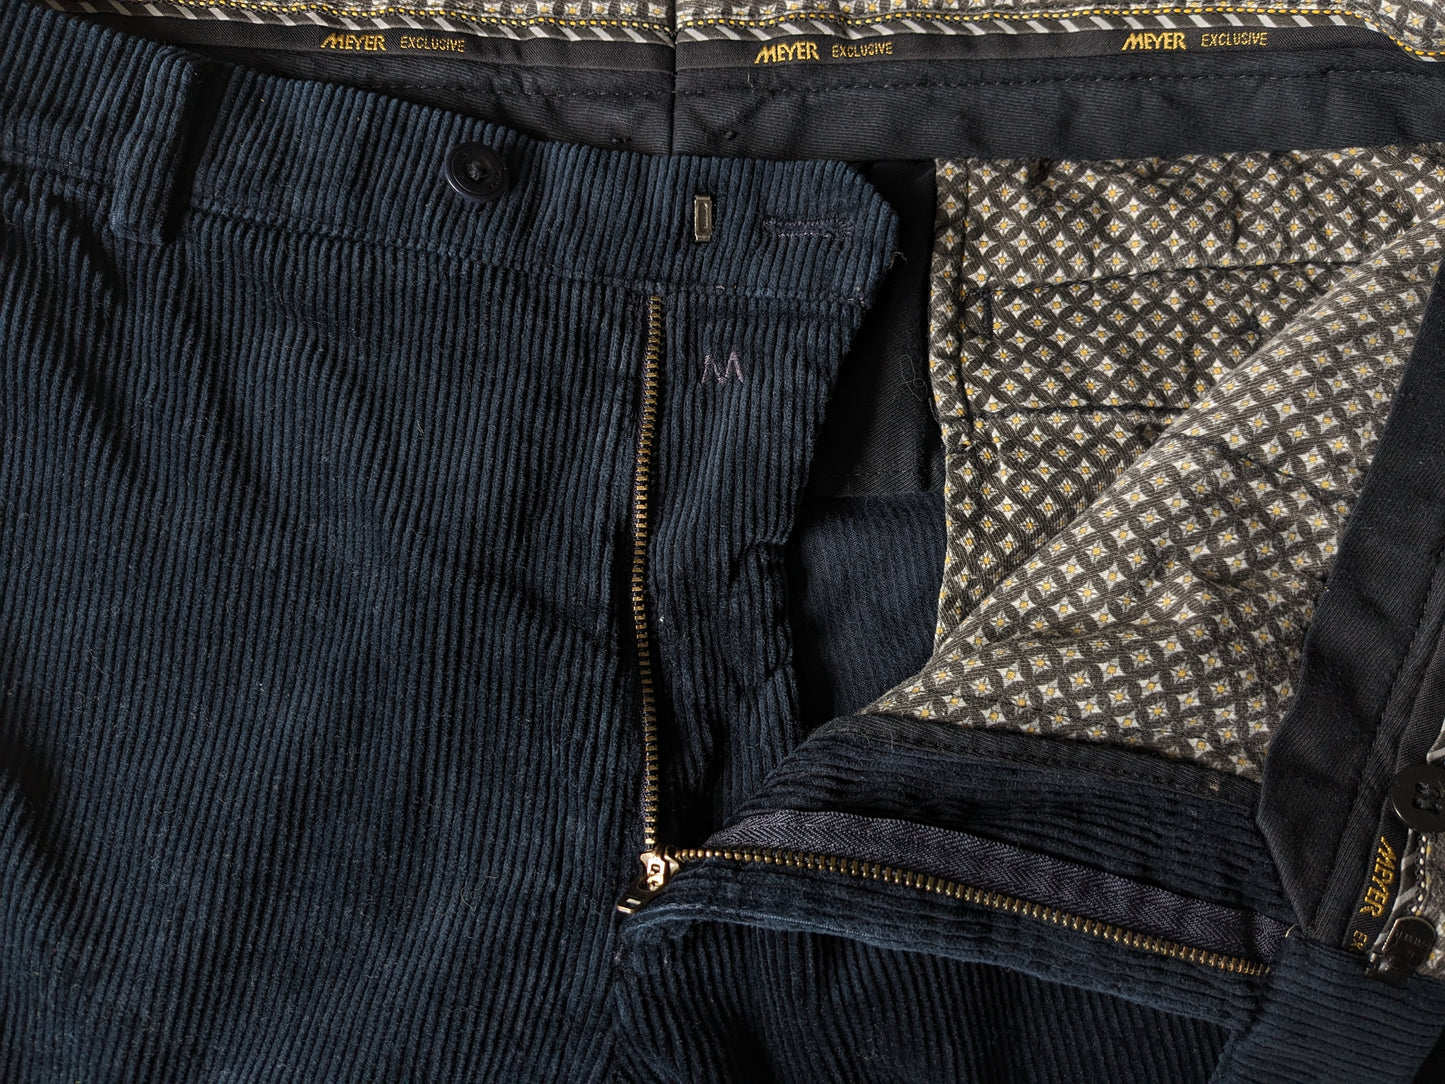 Meyer Exclusiv rib pants. Dark blue colored. Size 52 / L.